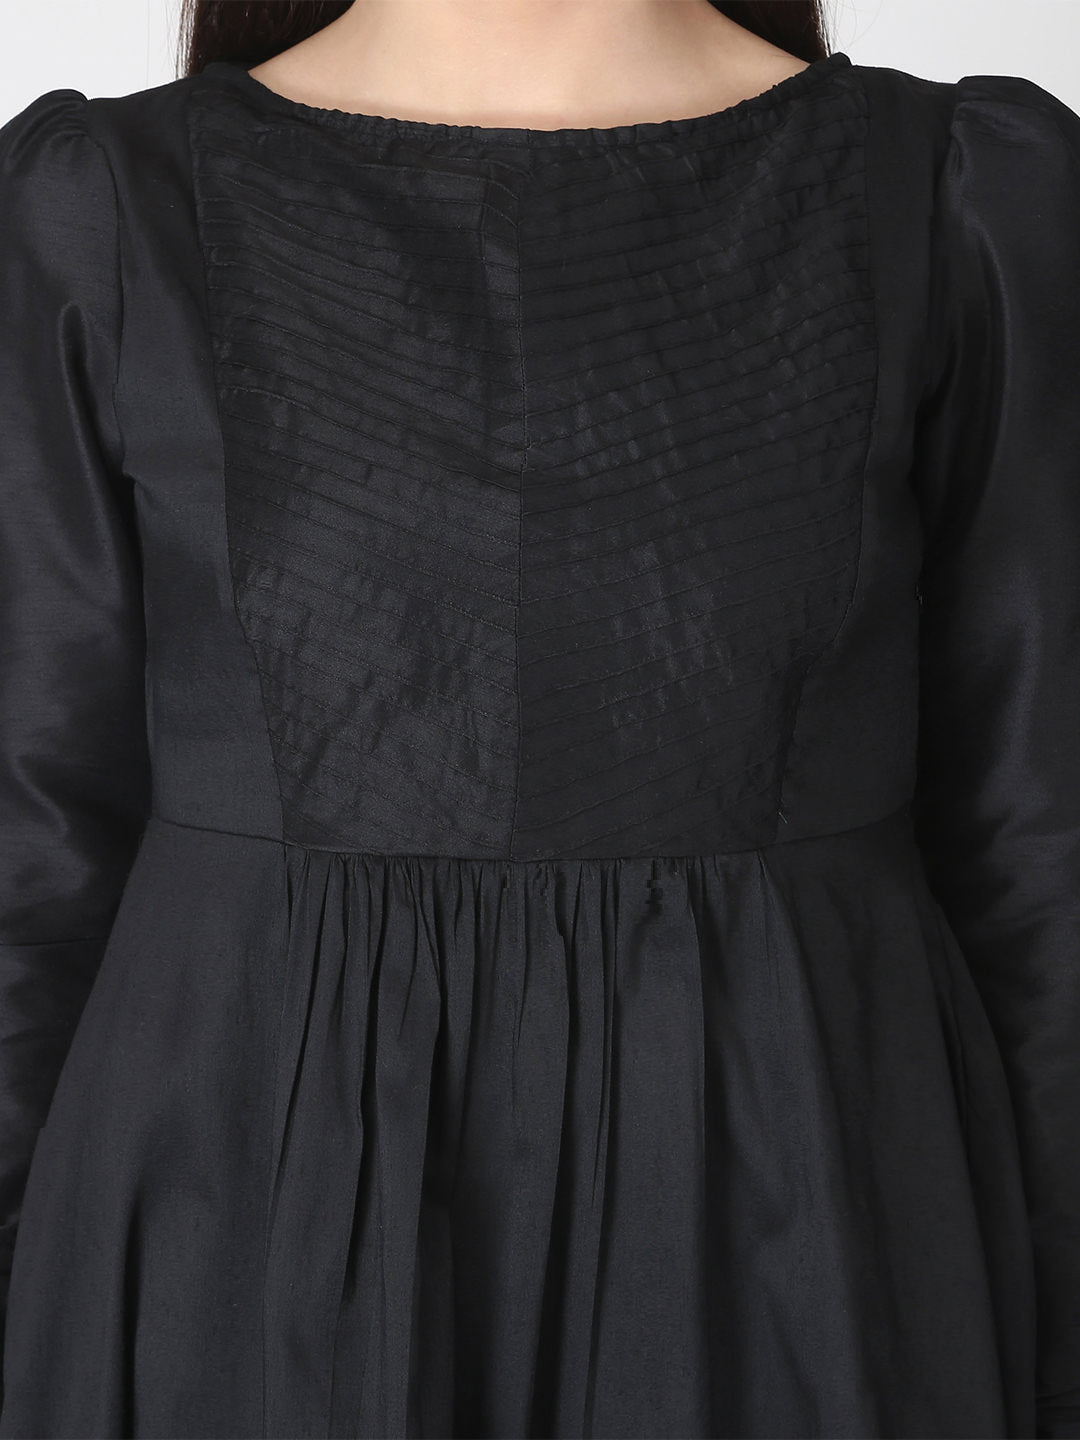 Black Cotton Silk Flared Kurta With Churidar Sleeves